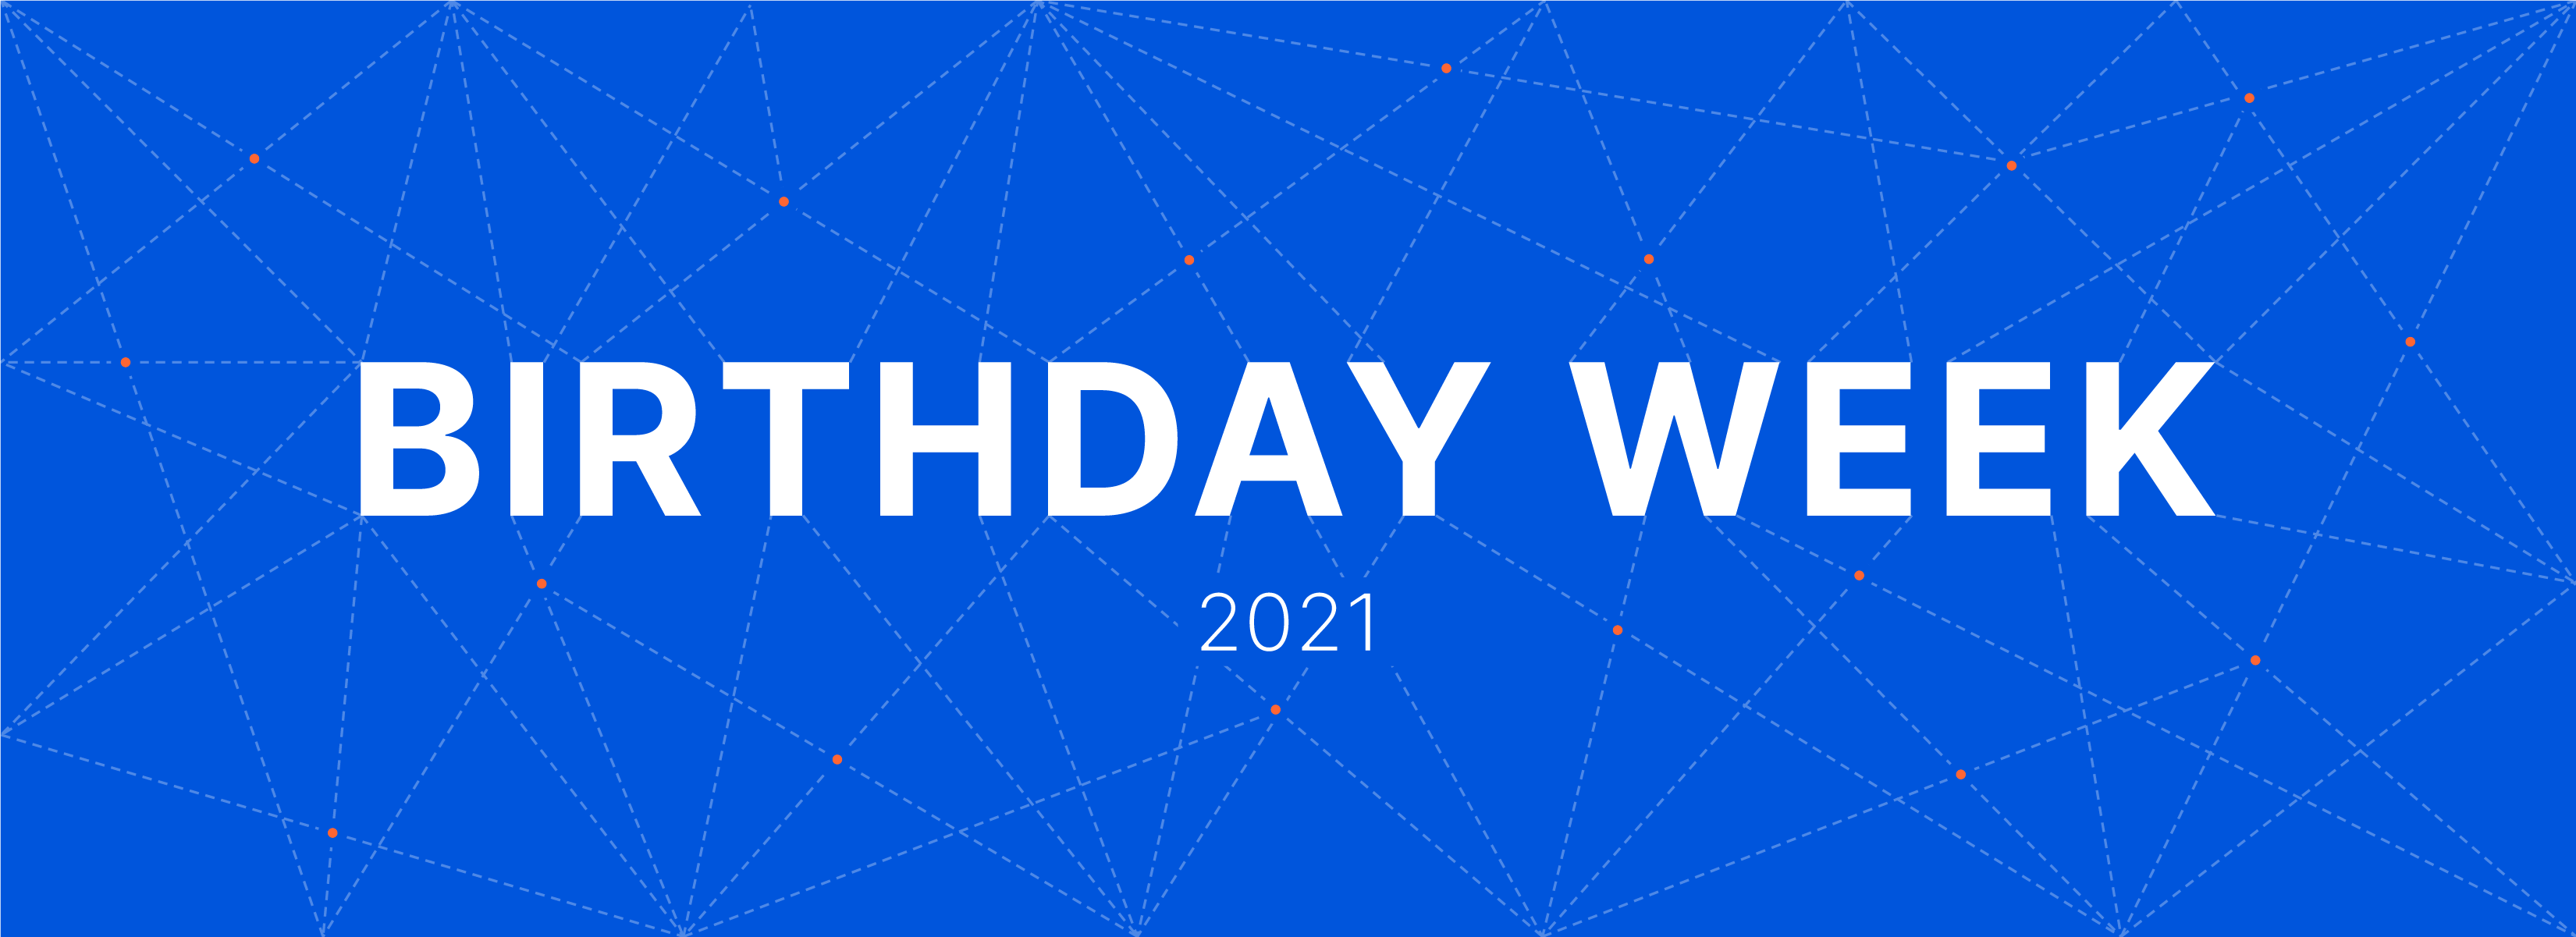 Birthday Week 2021 Hub Page Banner